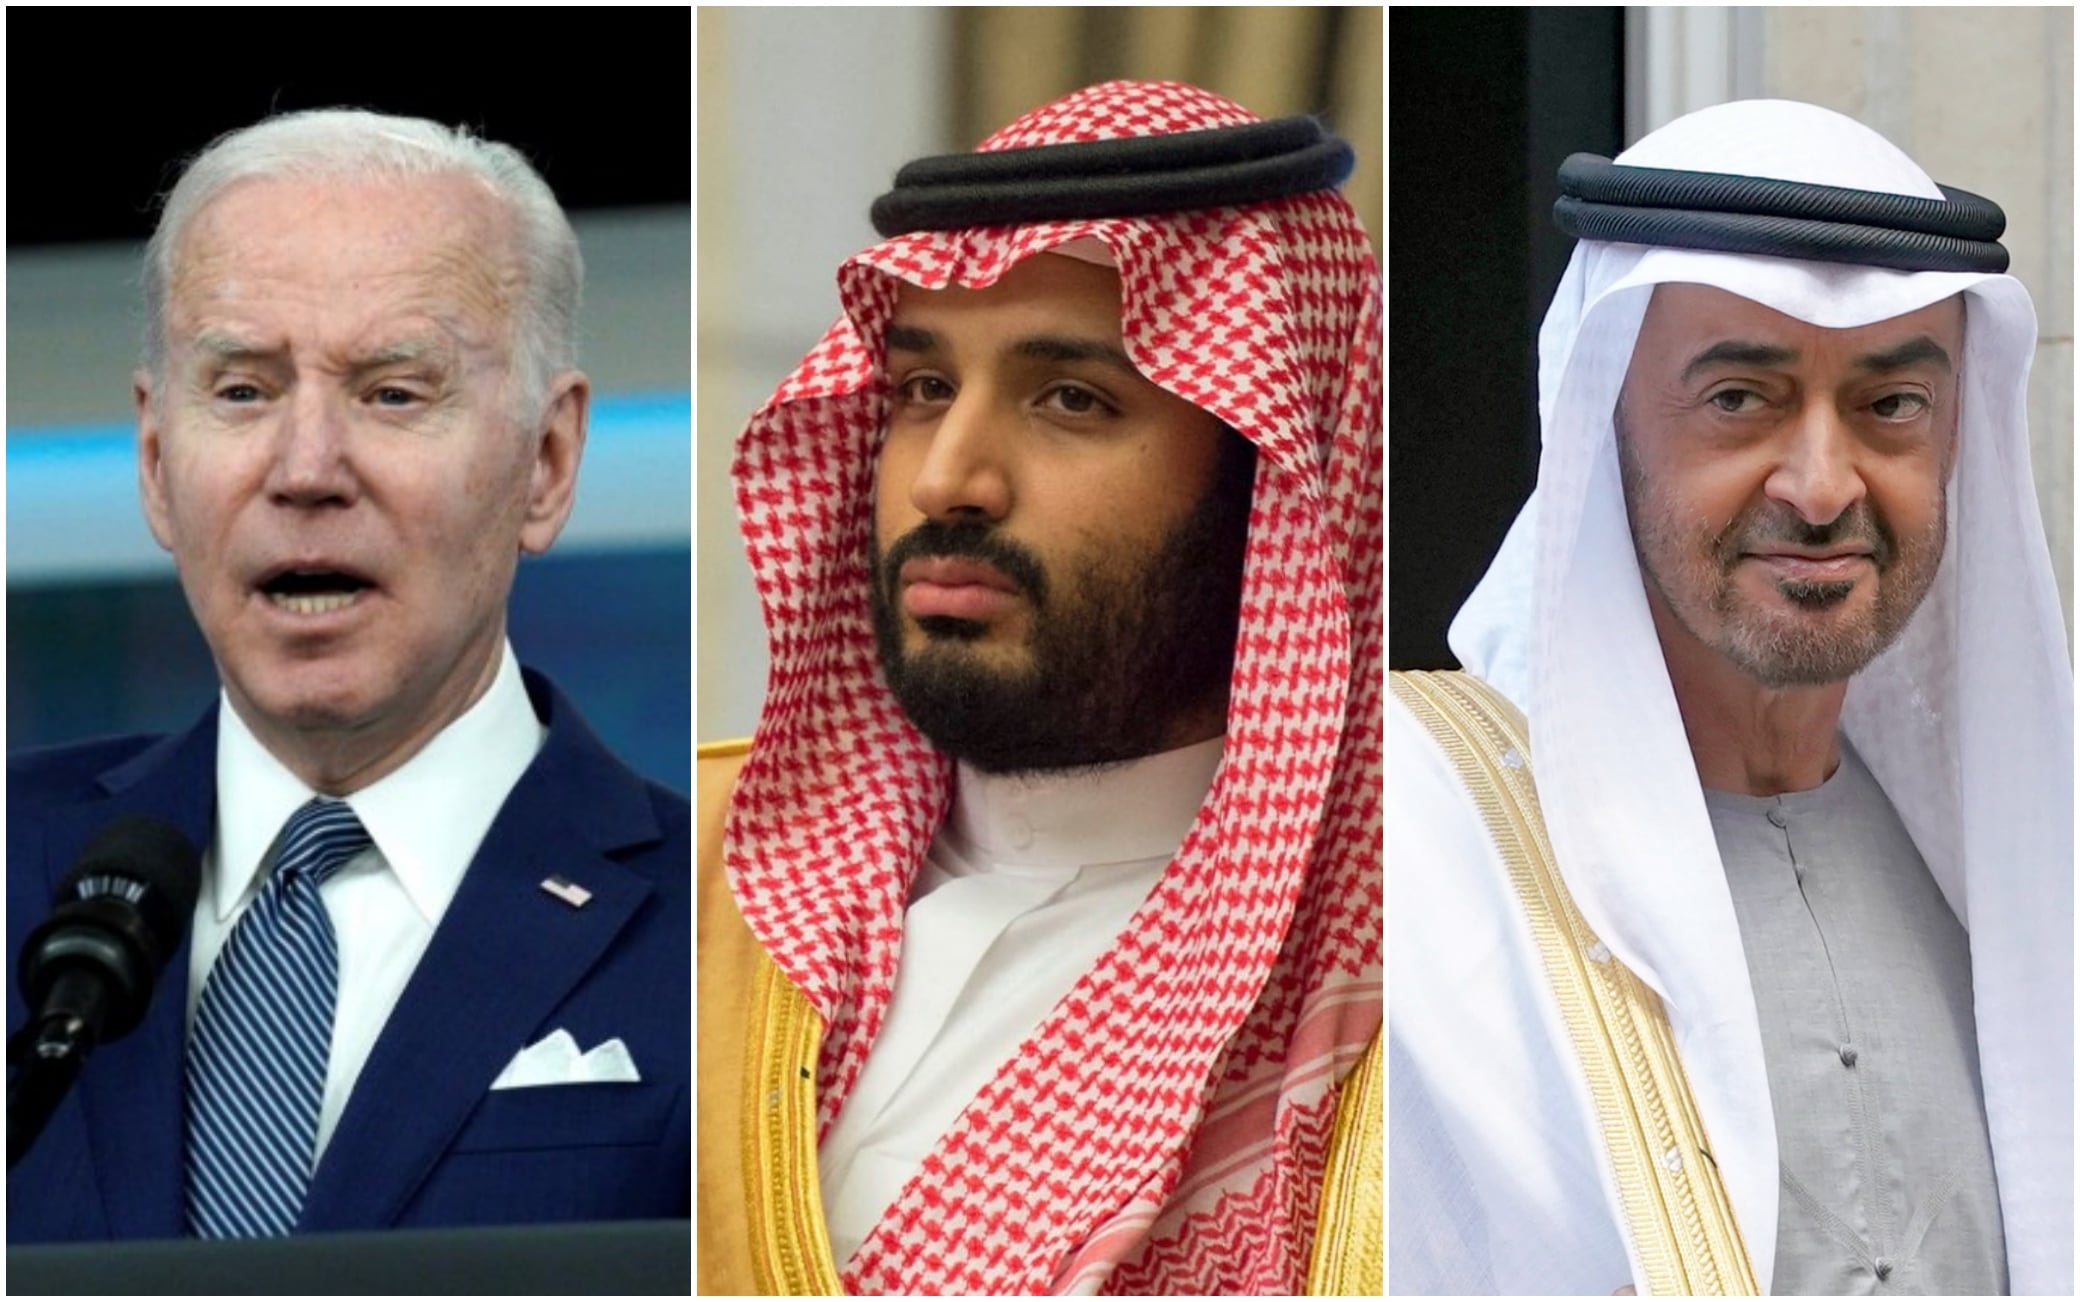 Russia-Ukraine war, leaders of Saudi Arabia and the Emirates reject Biden’s call